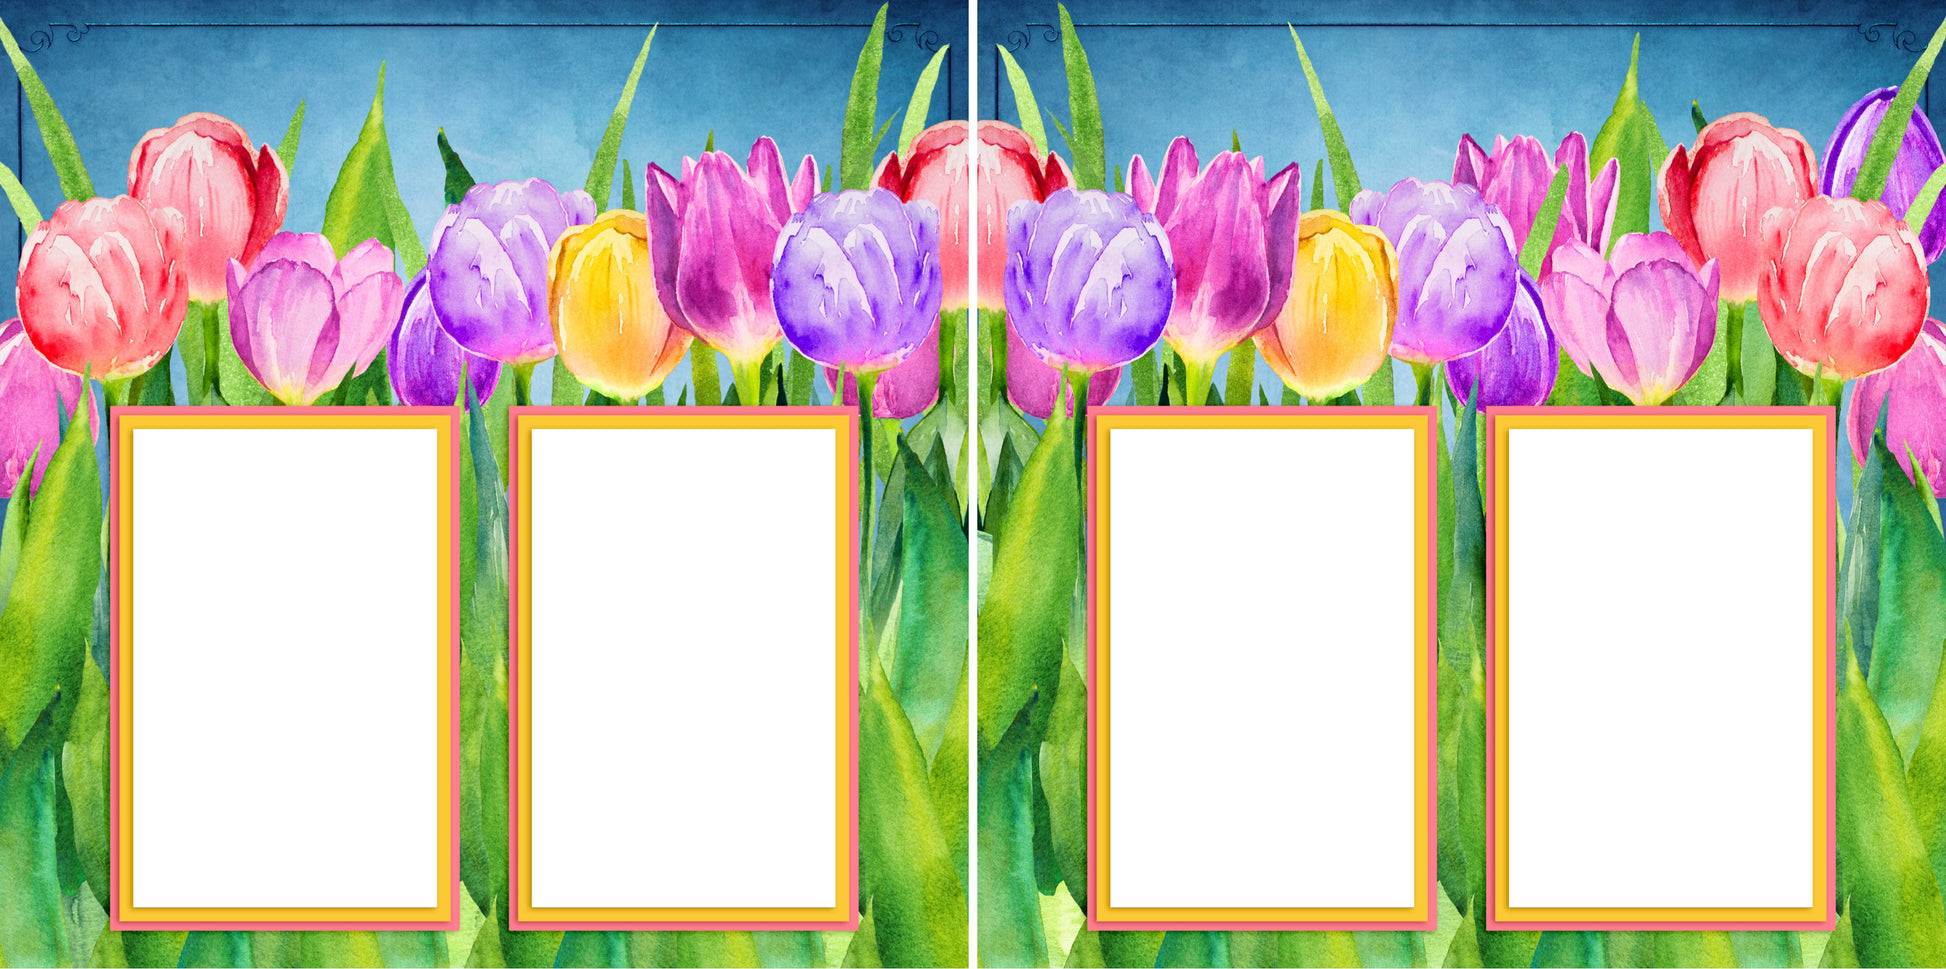 Tulips - Digital Scrapbook Pages - INSTANT DOWNLOAD - EZscrapbooks Scrapbook Layouts Farm - Garden, Girls, Spring - Easter